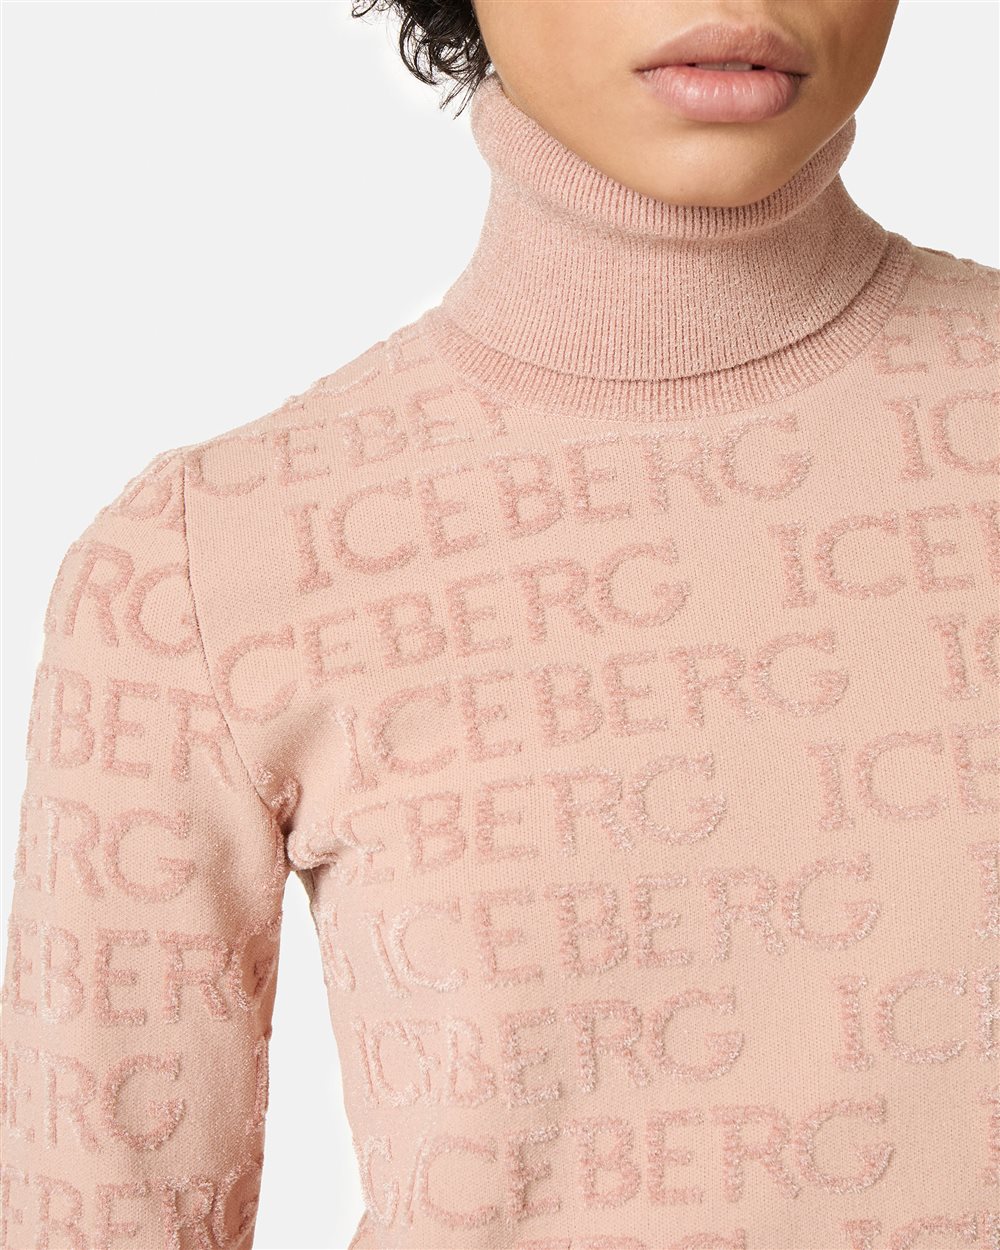 Turtleneck sweater with logo - Iceberg - Official Website